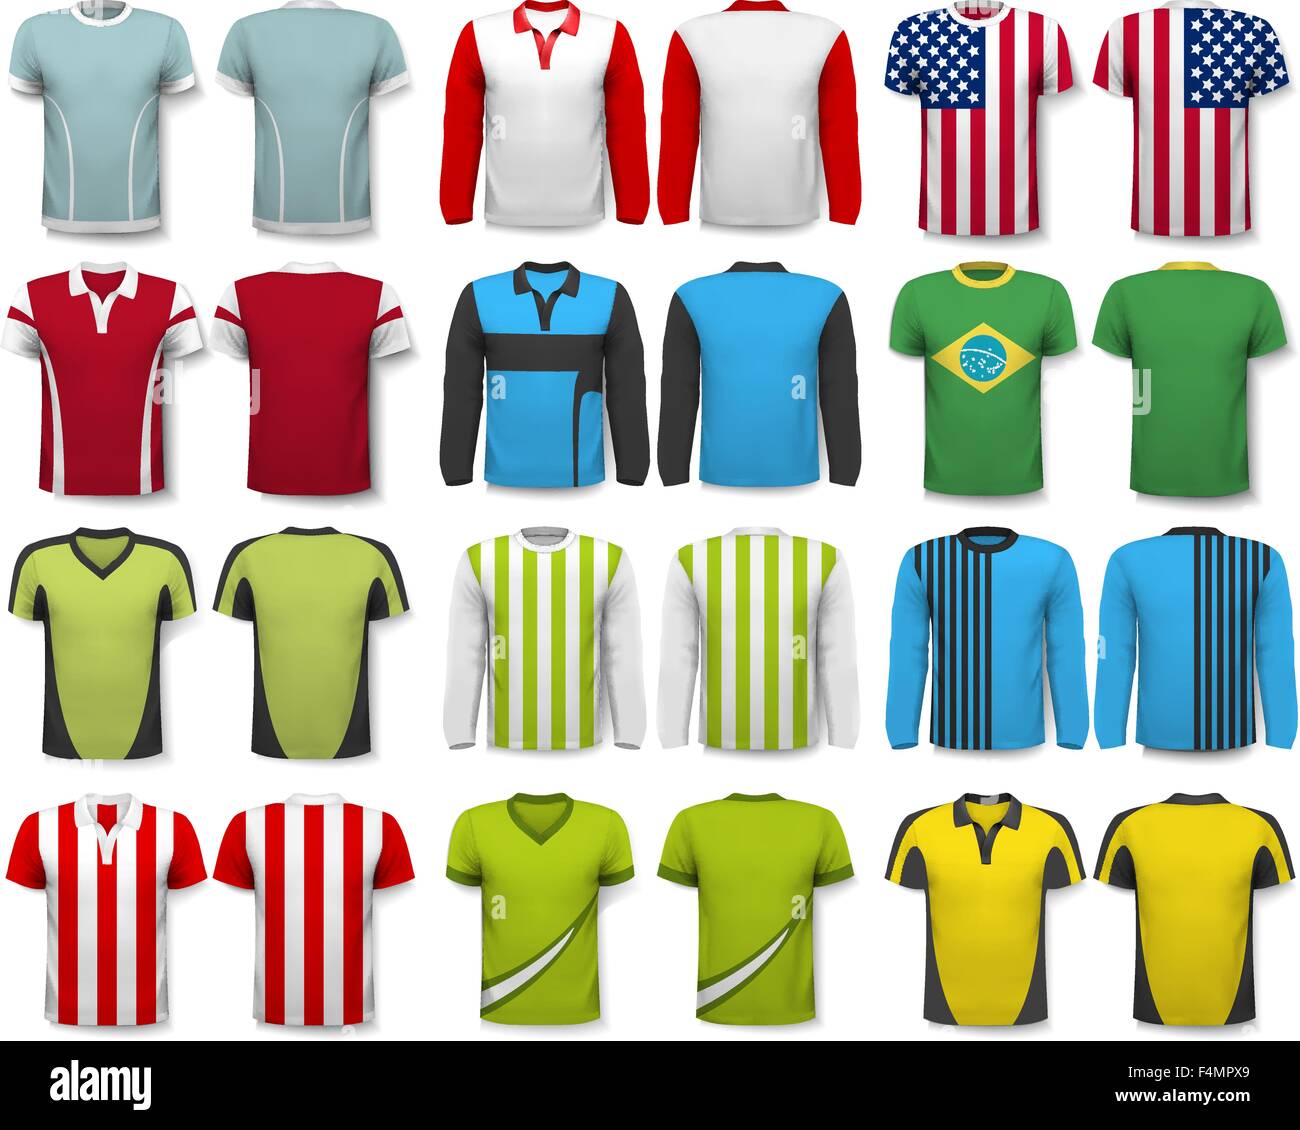 Arsenal shirt Stock Vector Images - Alamy